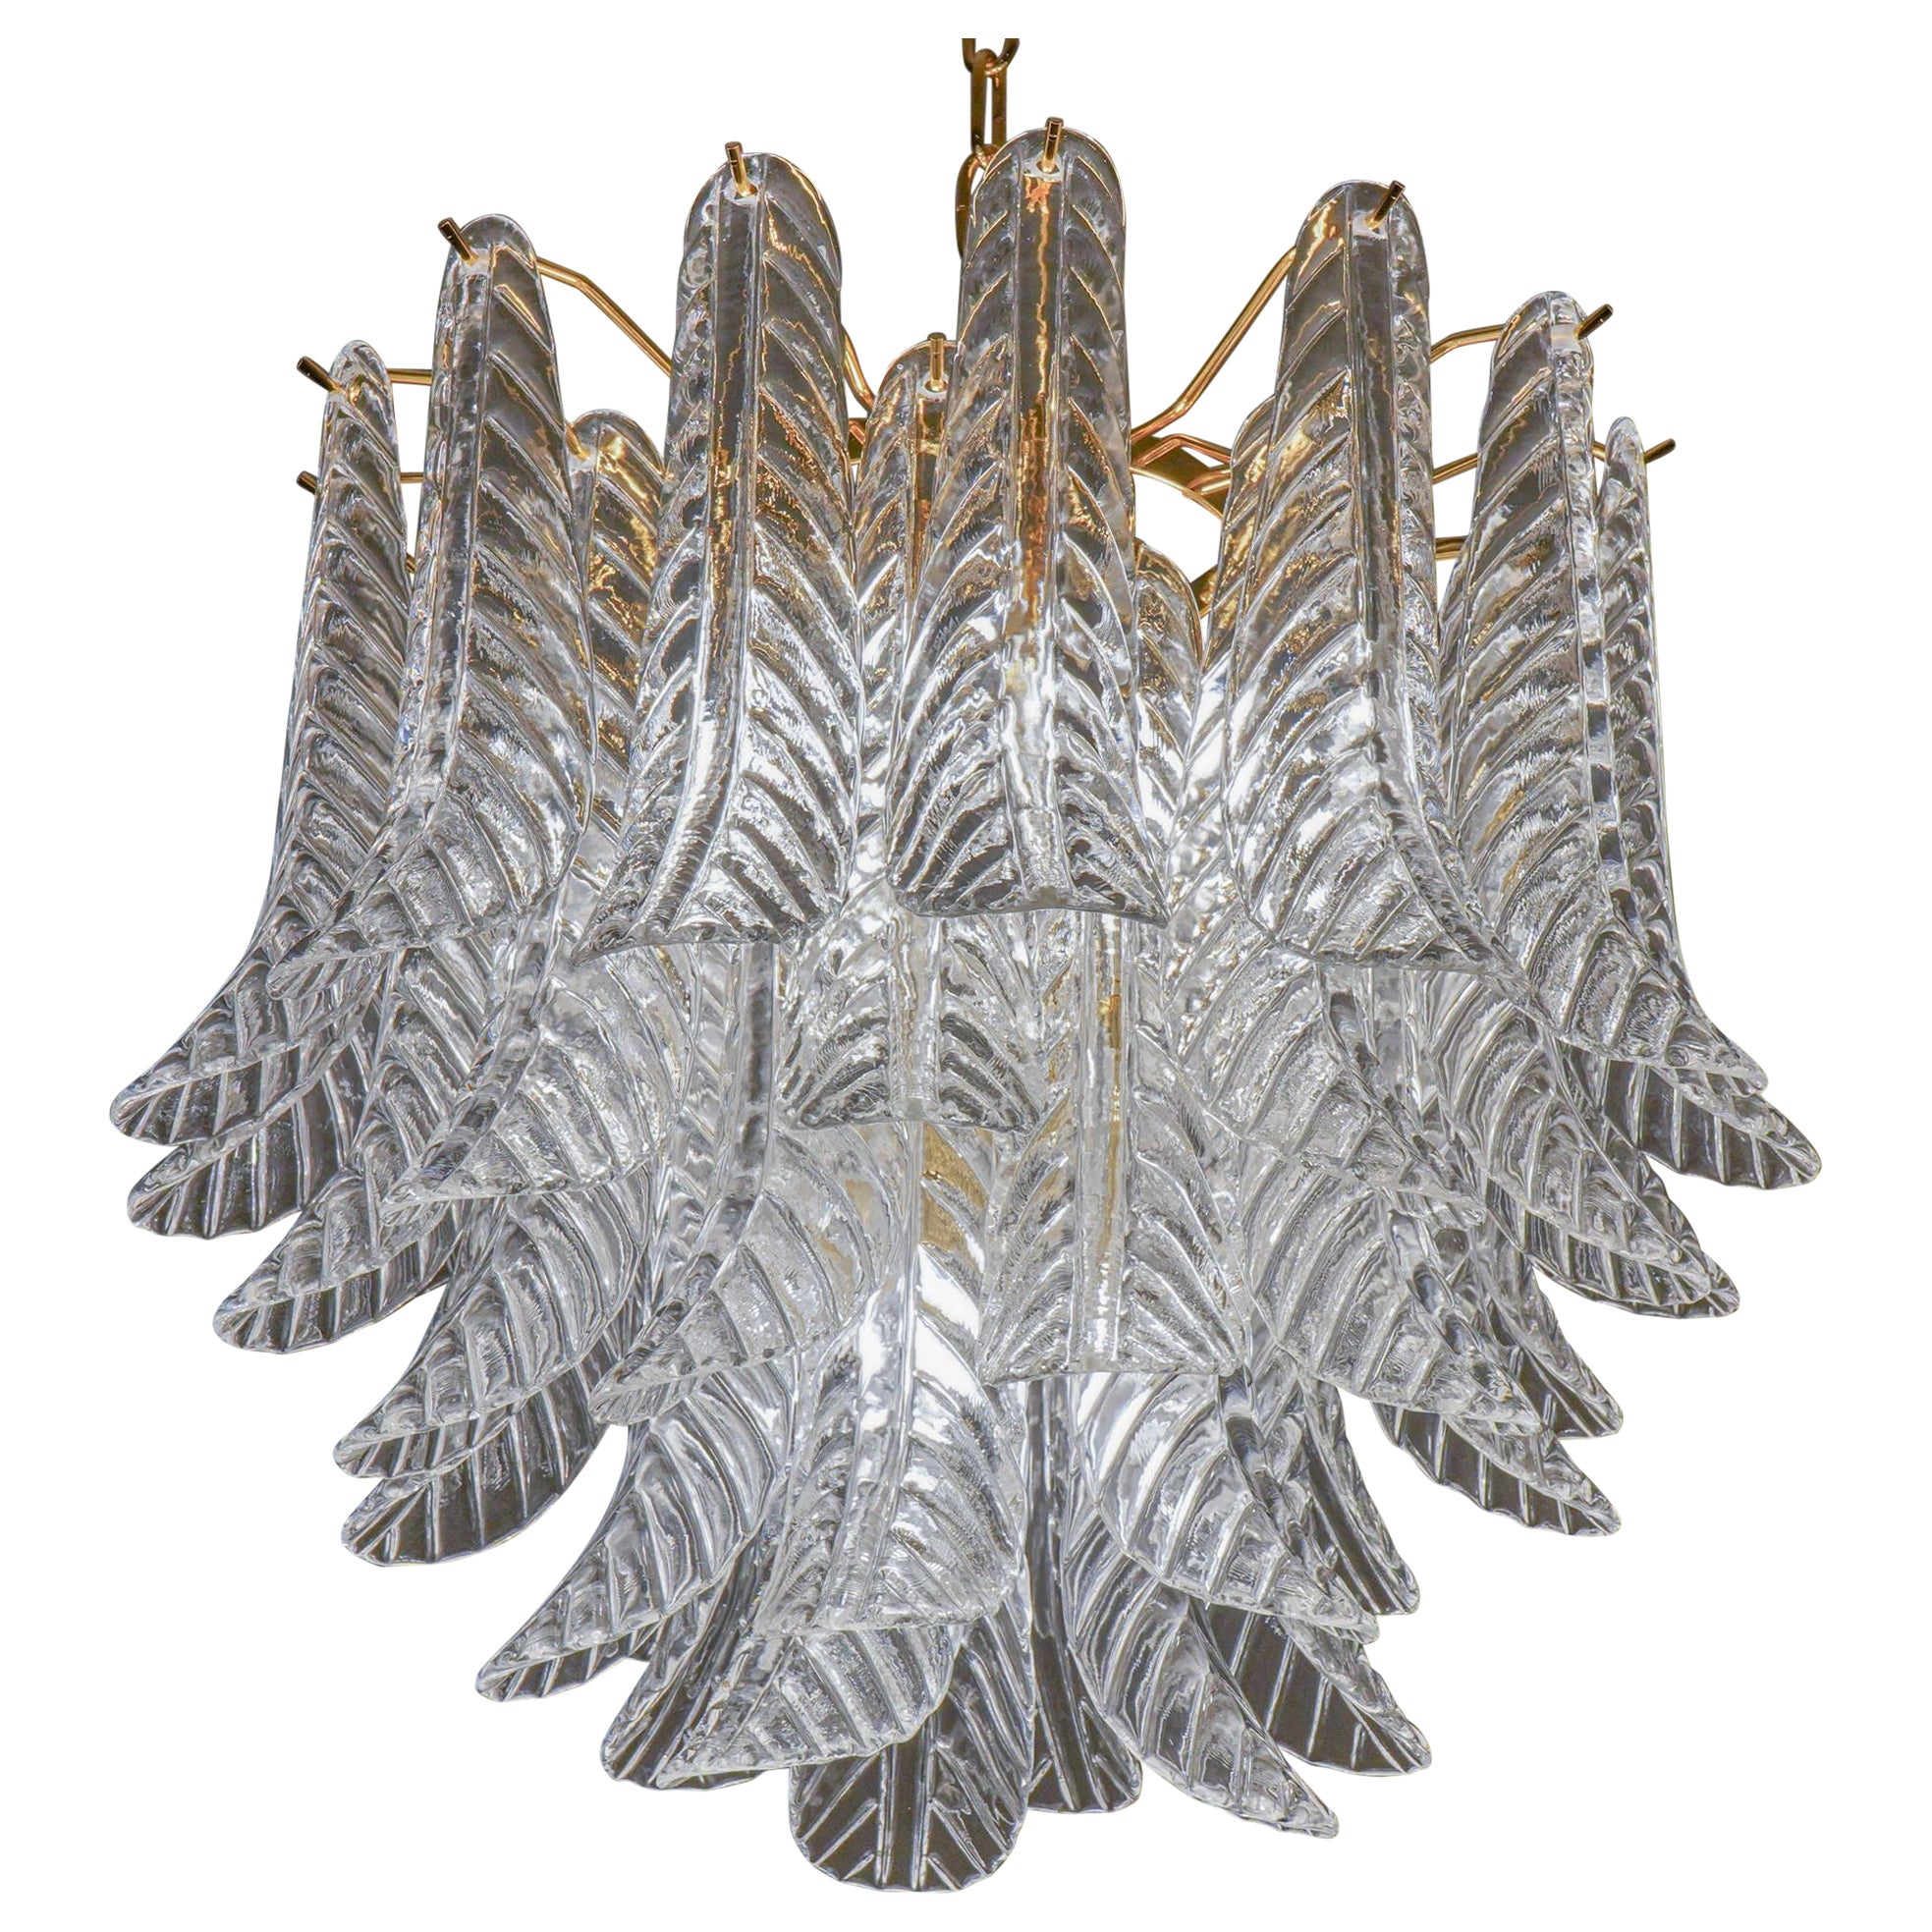 Veneziana 5 tiers chandelier. 41 Clear glass piece . Piattelli design. US wired